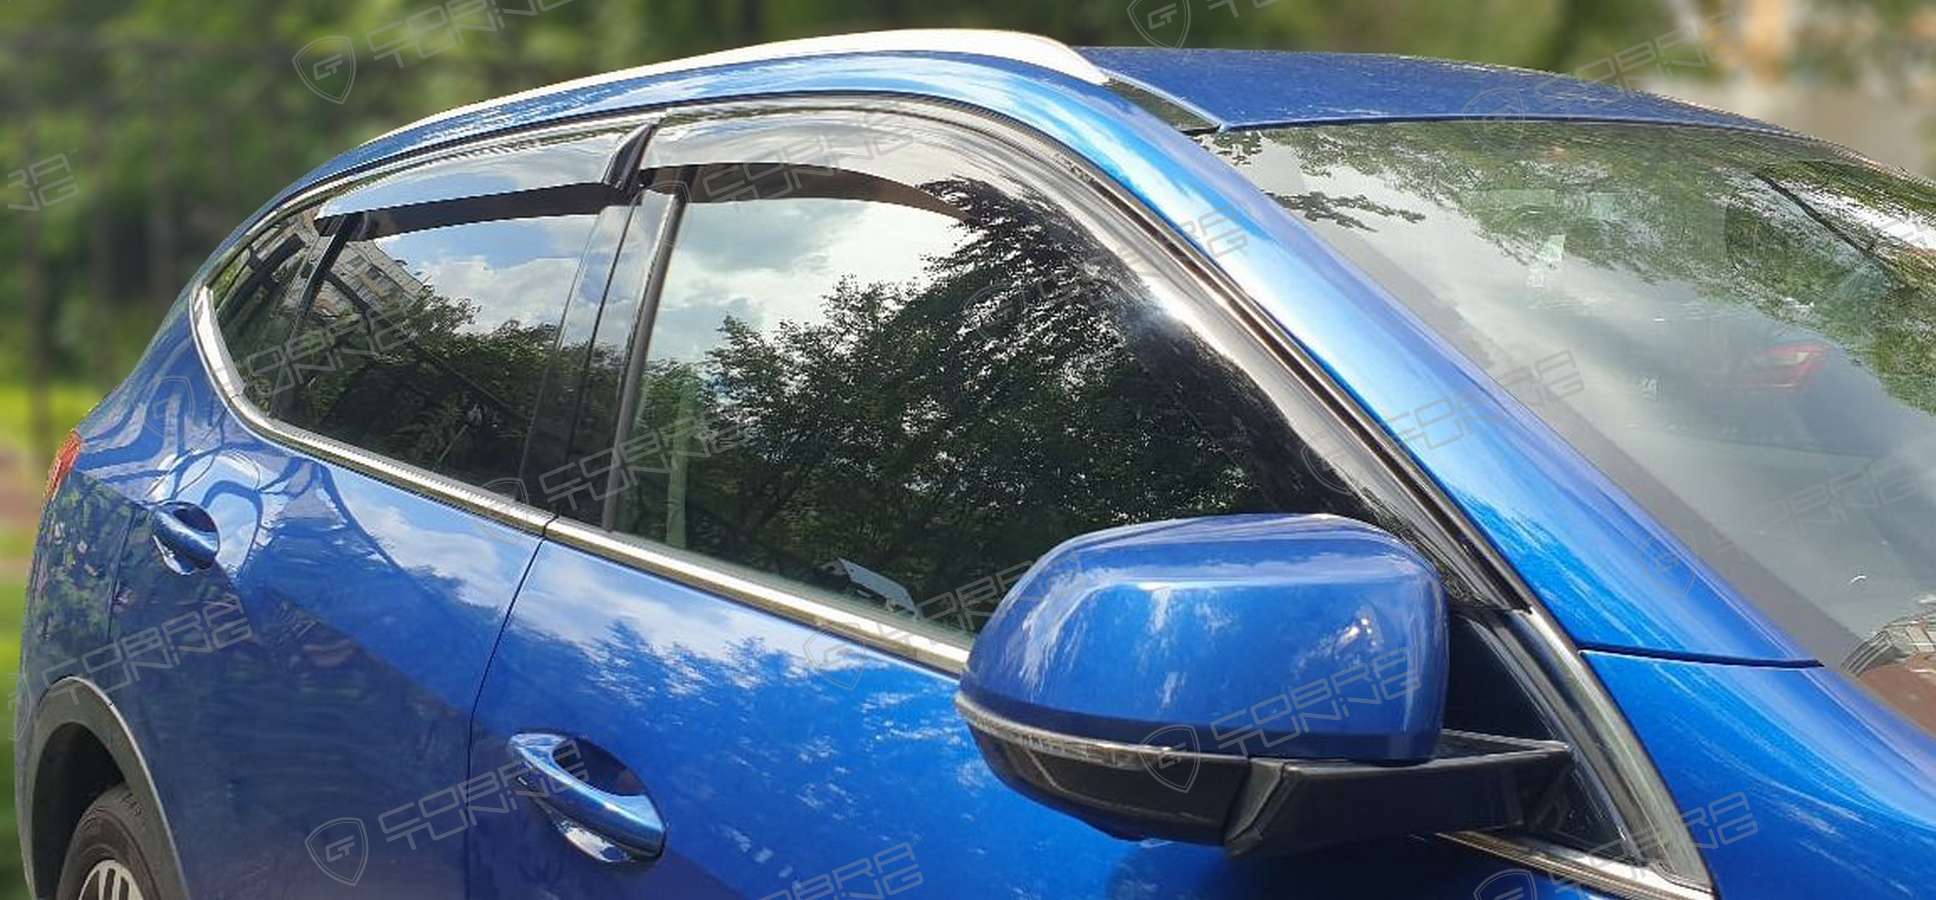 Отзыв - ветровики Cobra Tuning на окна автомобиля Haval F7 2019